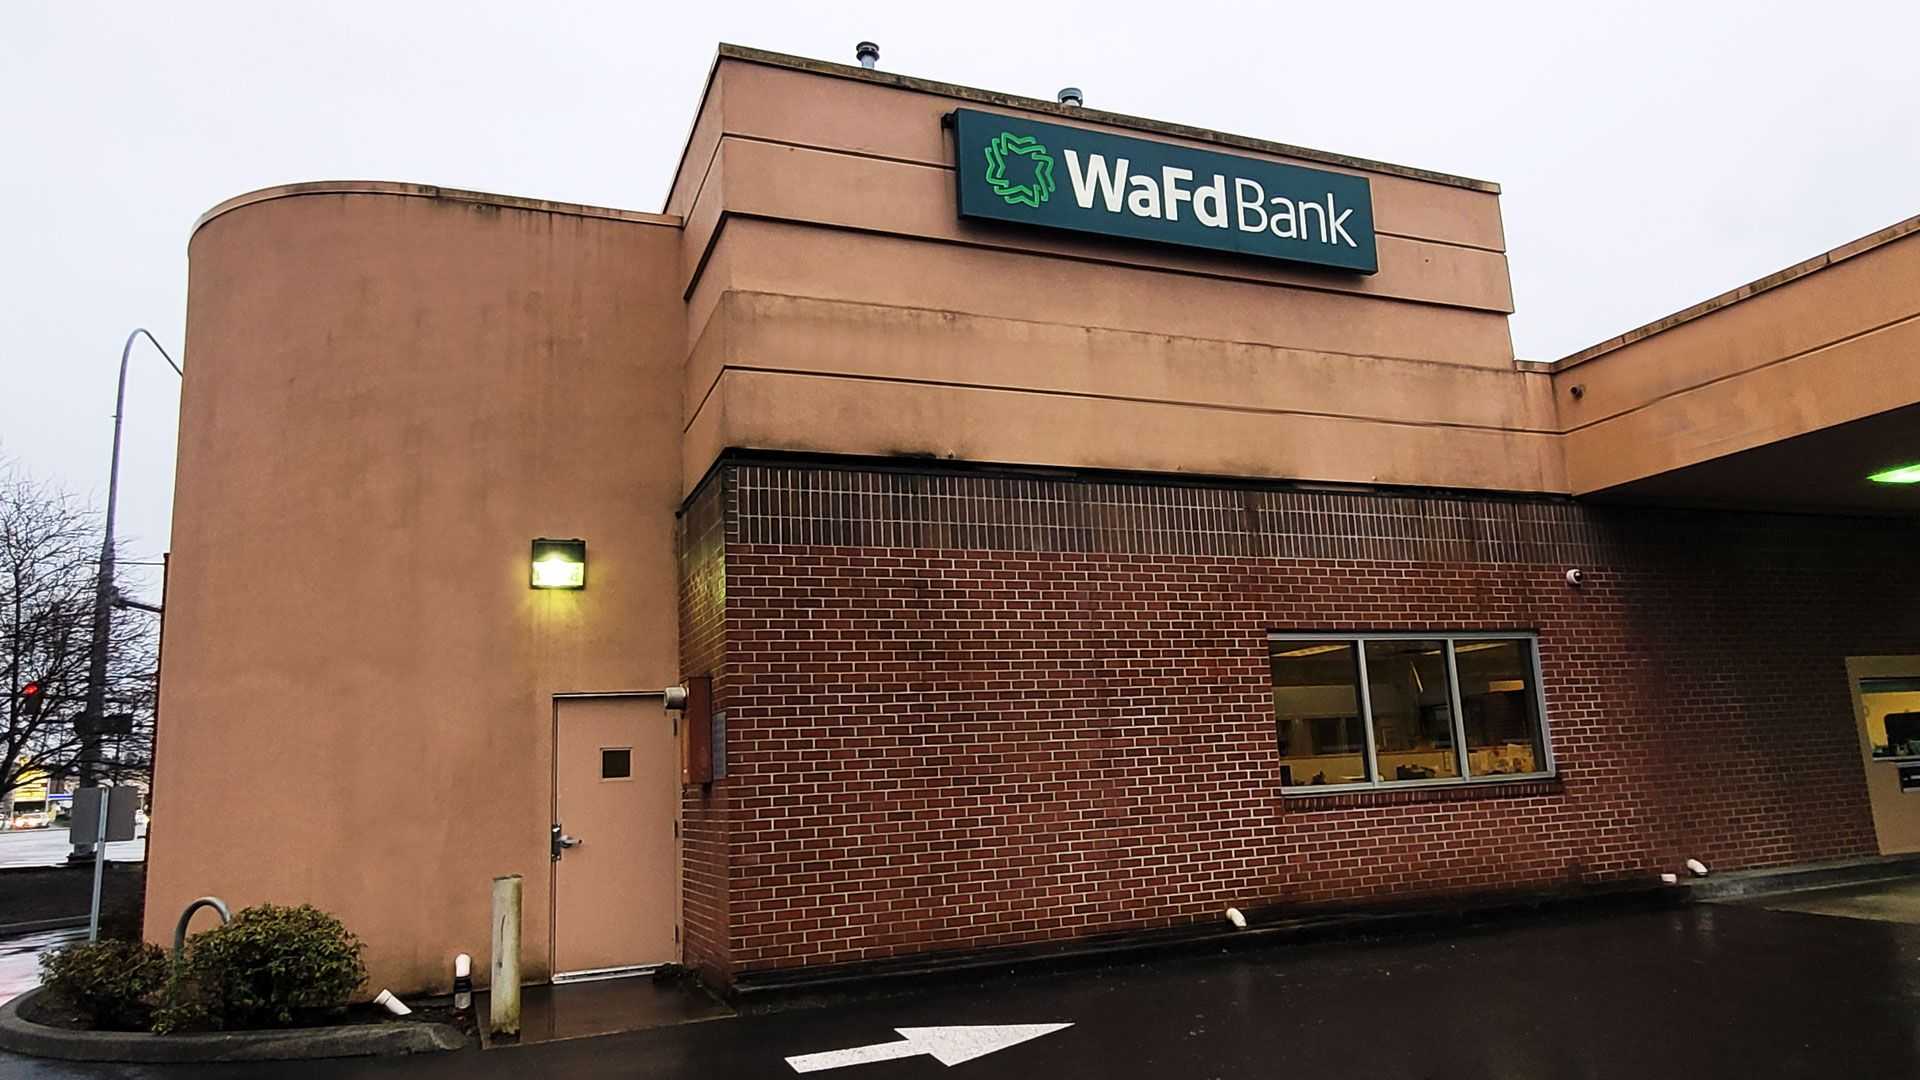 WaFd Bank in Everett, Washington #1240 - Washington Federal.